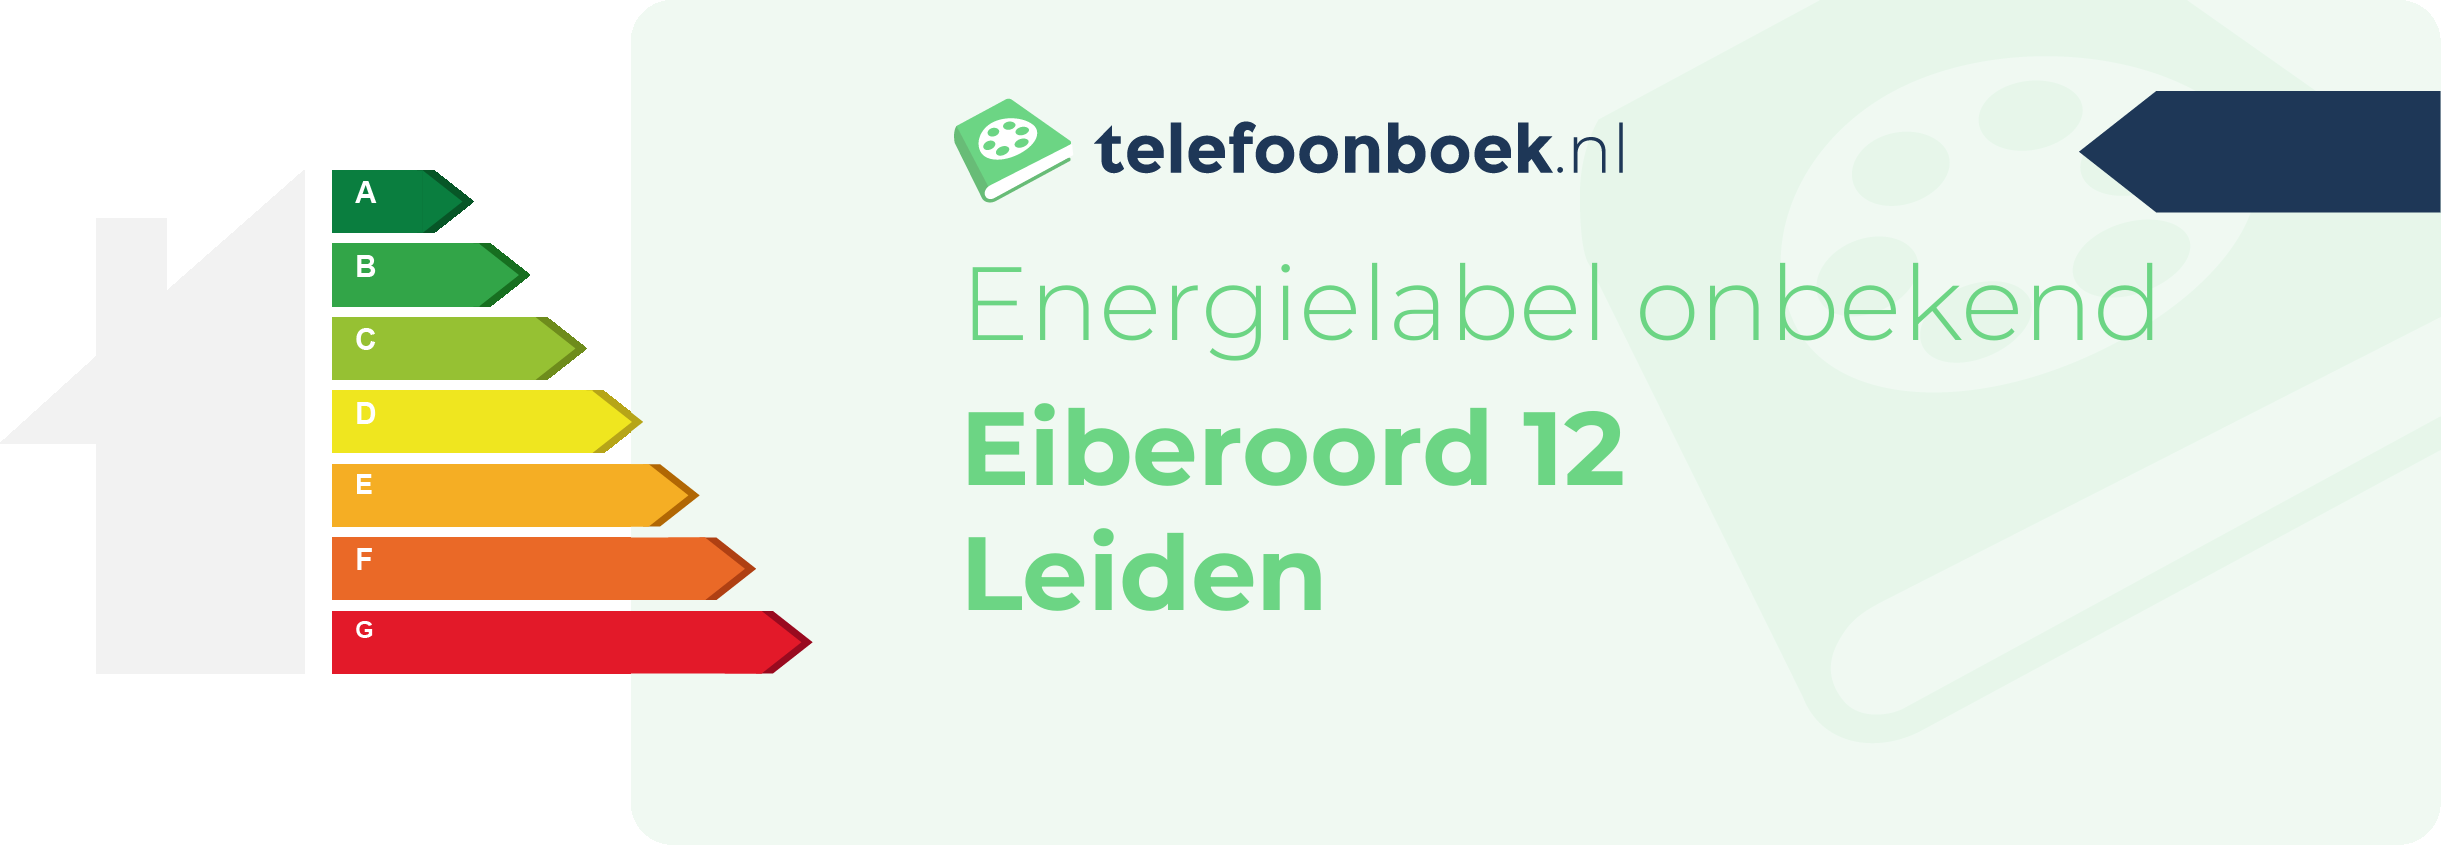 Energielabel Eiberoord 12 Leiden